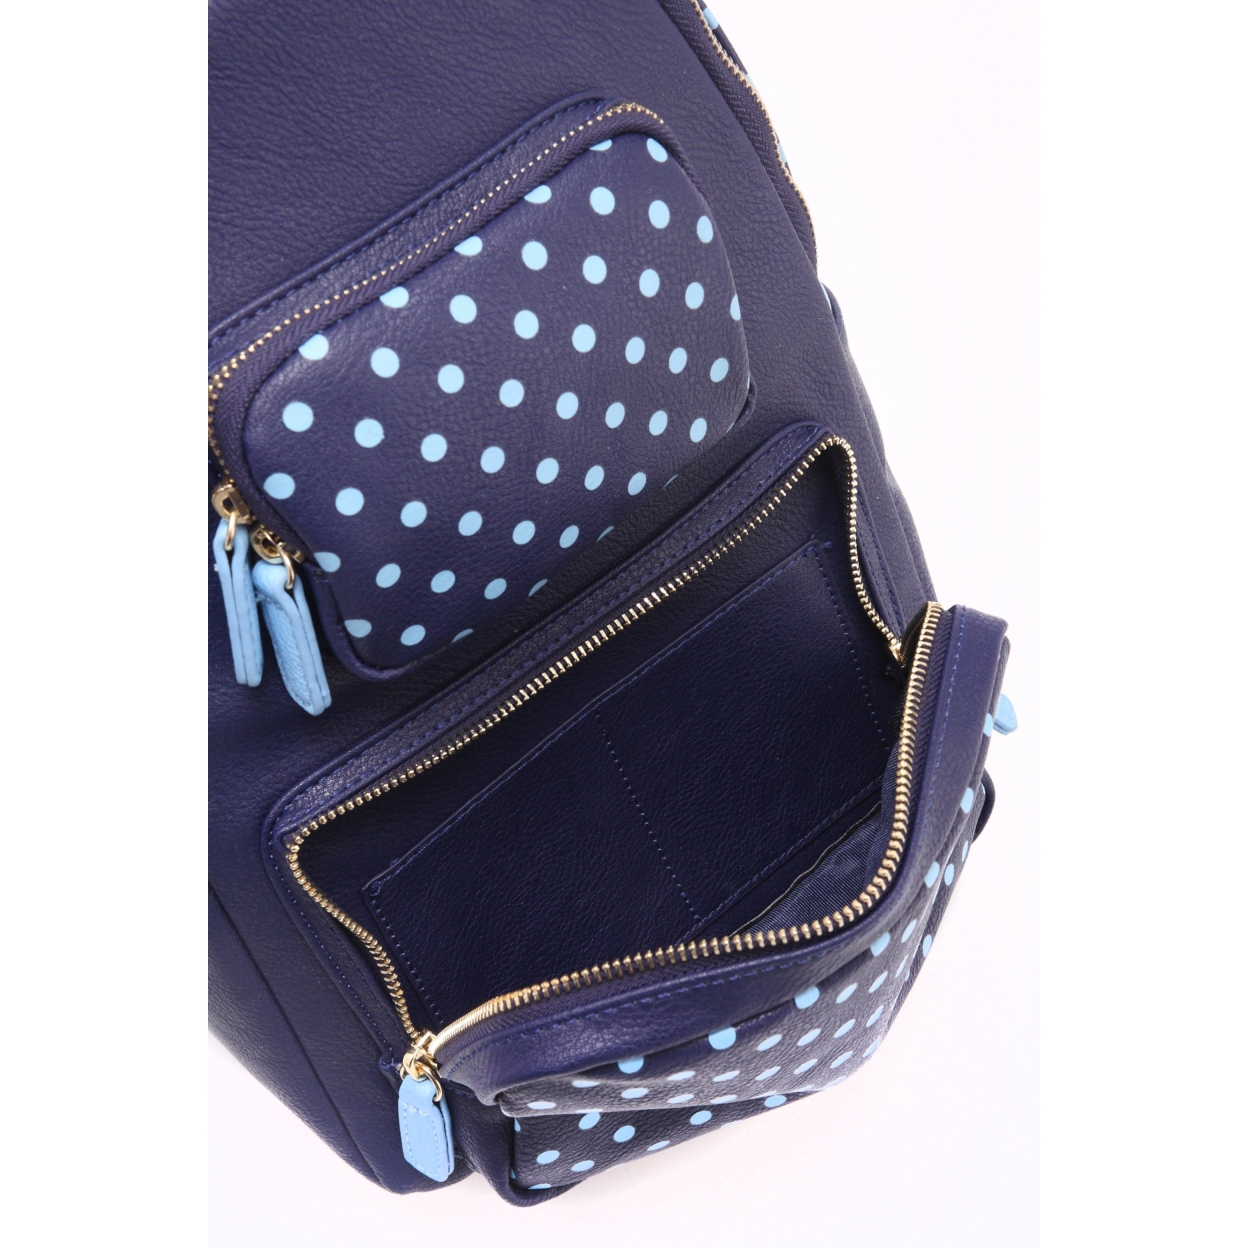 SCORE! Natalie Michelle Large Polka Dot Designer Backpack - Navy Blue And Light Blue